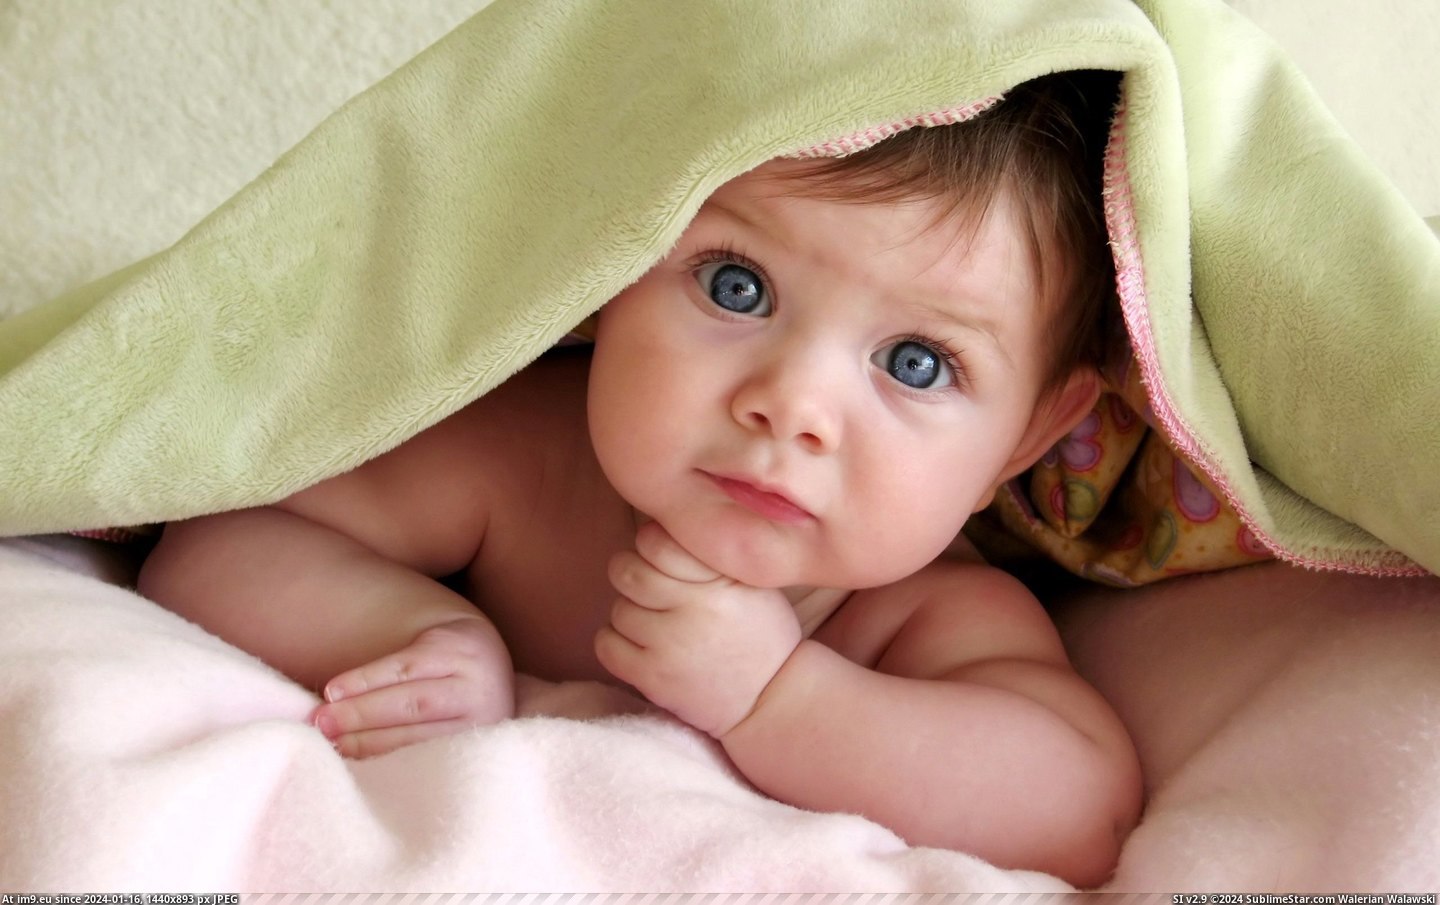 #Cute #Wallpaper #Starring #Wide #Baby Cute Baby Starring Wide HD Wallpaper Pic. (Bild von album Unique HD Wallpapers))